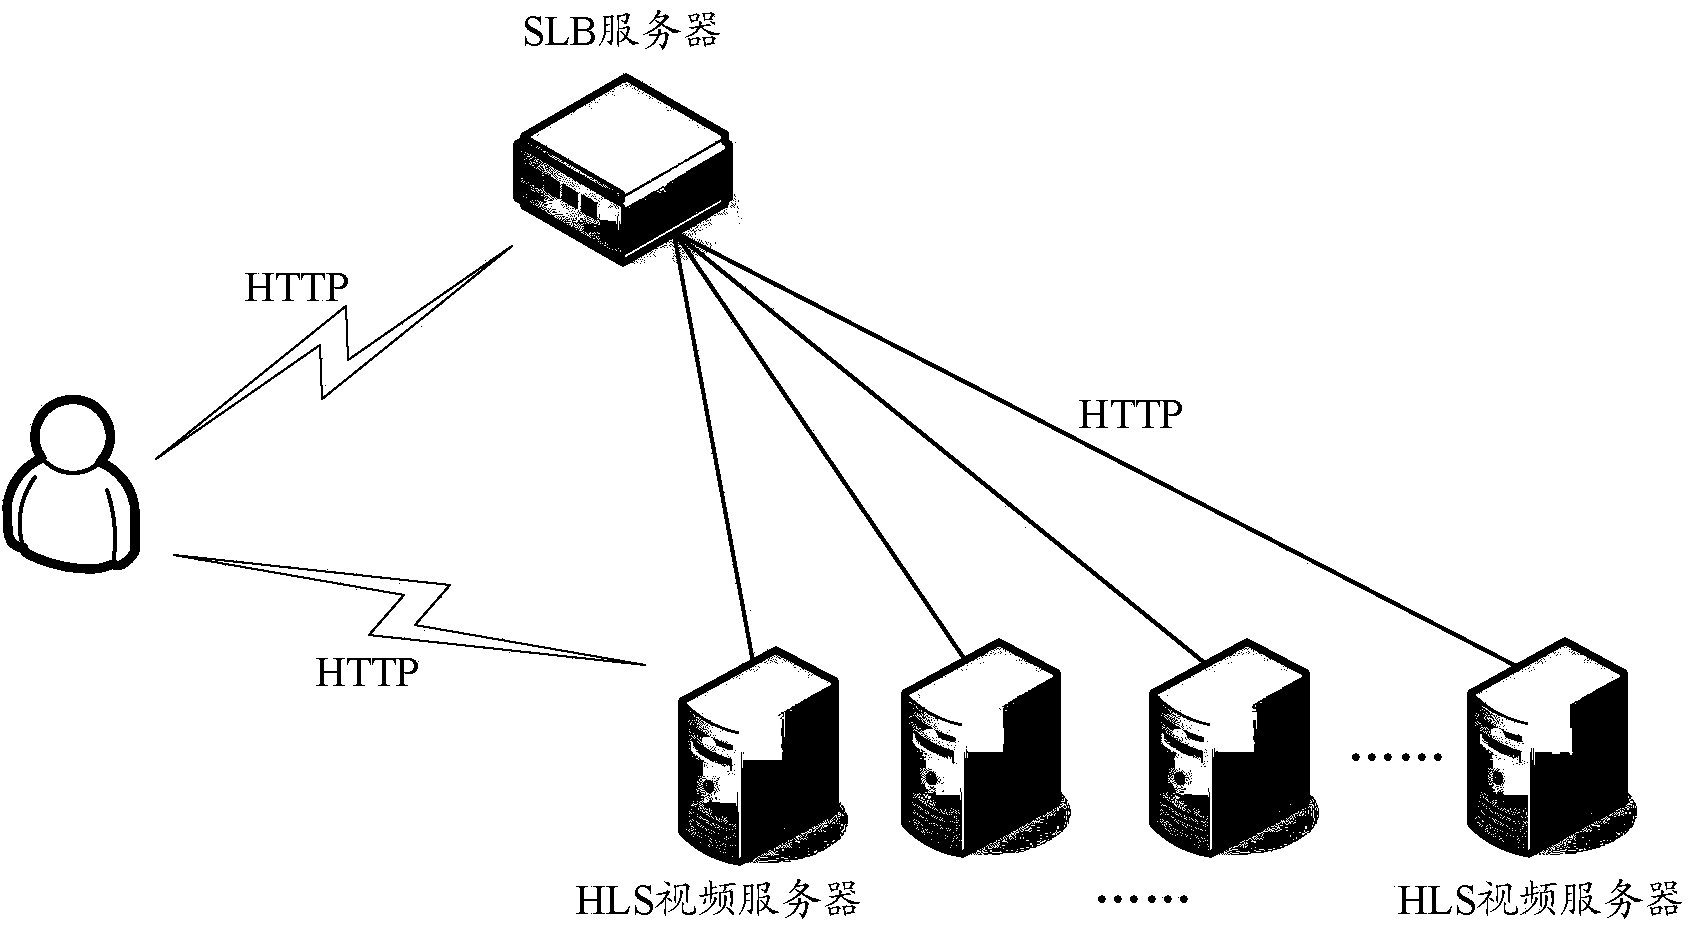 HLS-based (http live streaming based) capacity control method, HLS-based capacity control service system and SLB (server load balancing) server